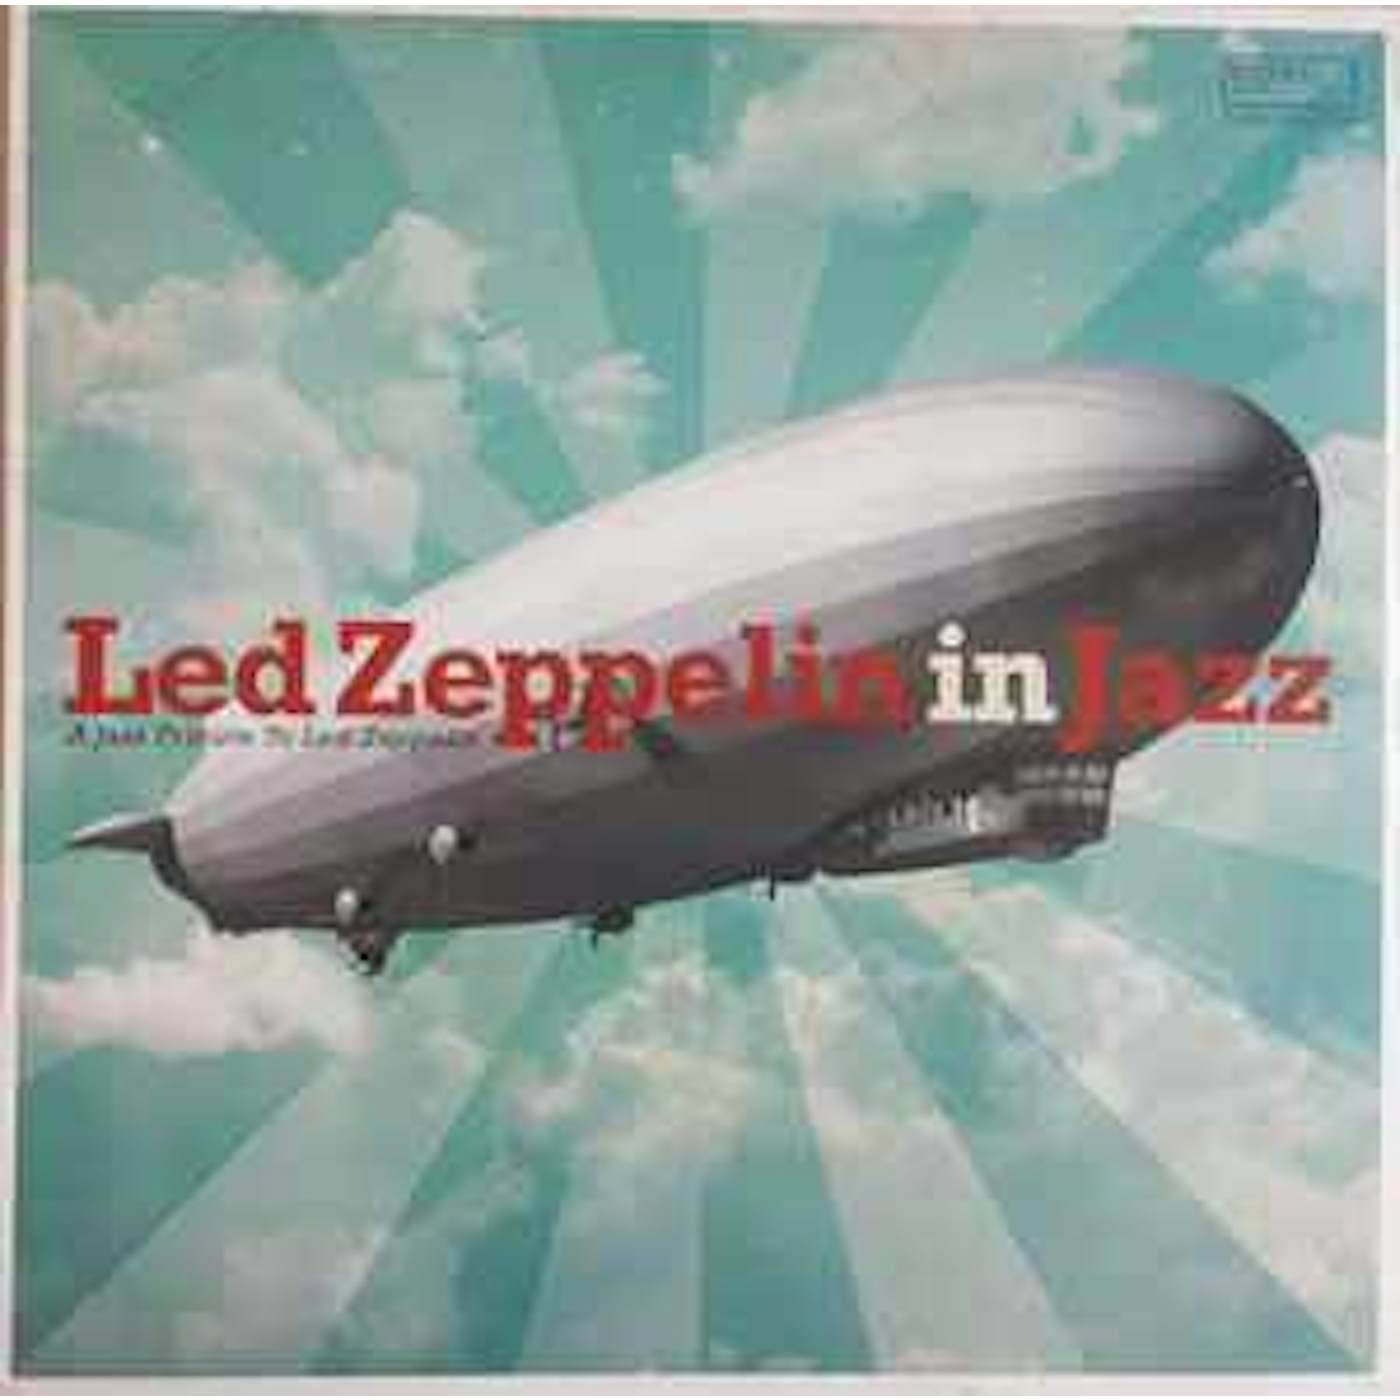 Various Artists Various / Led Zeppelin in Jazz - LP (Vinyl)